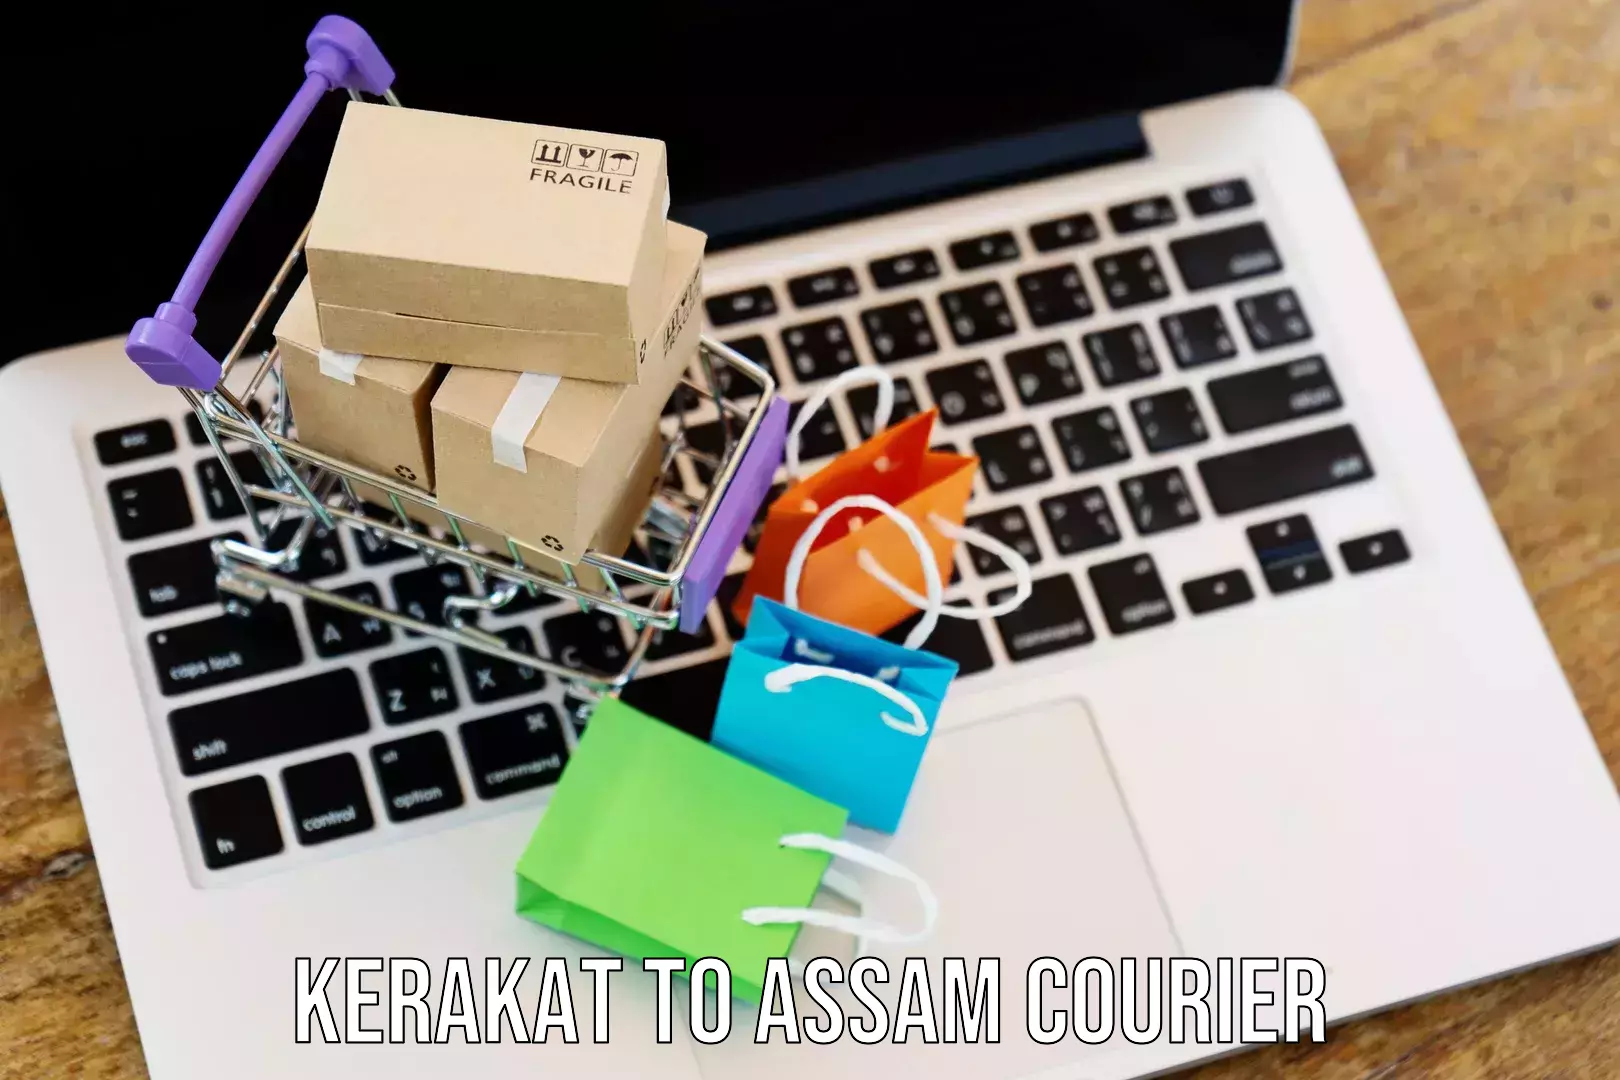 Global logistics network Kerakat to Assam